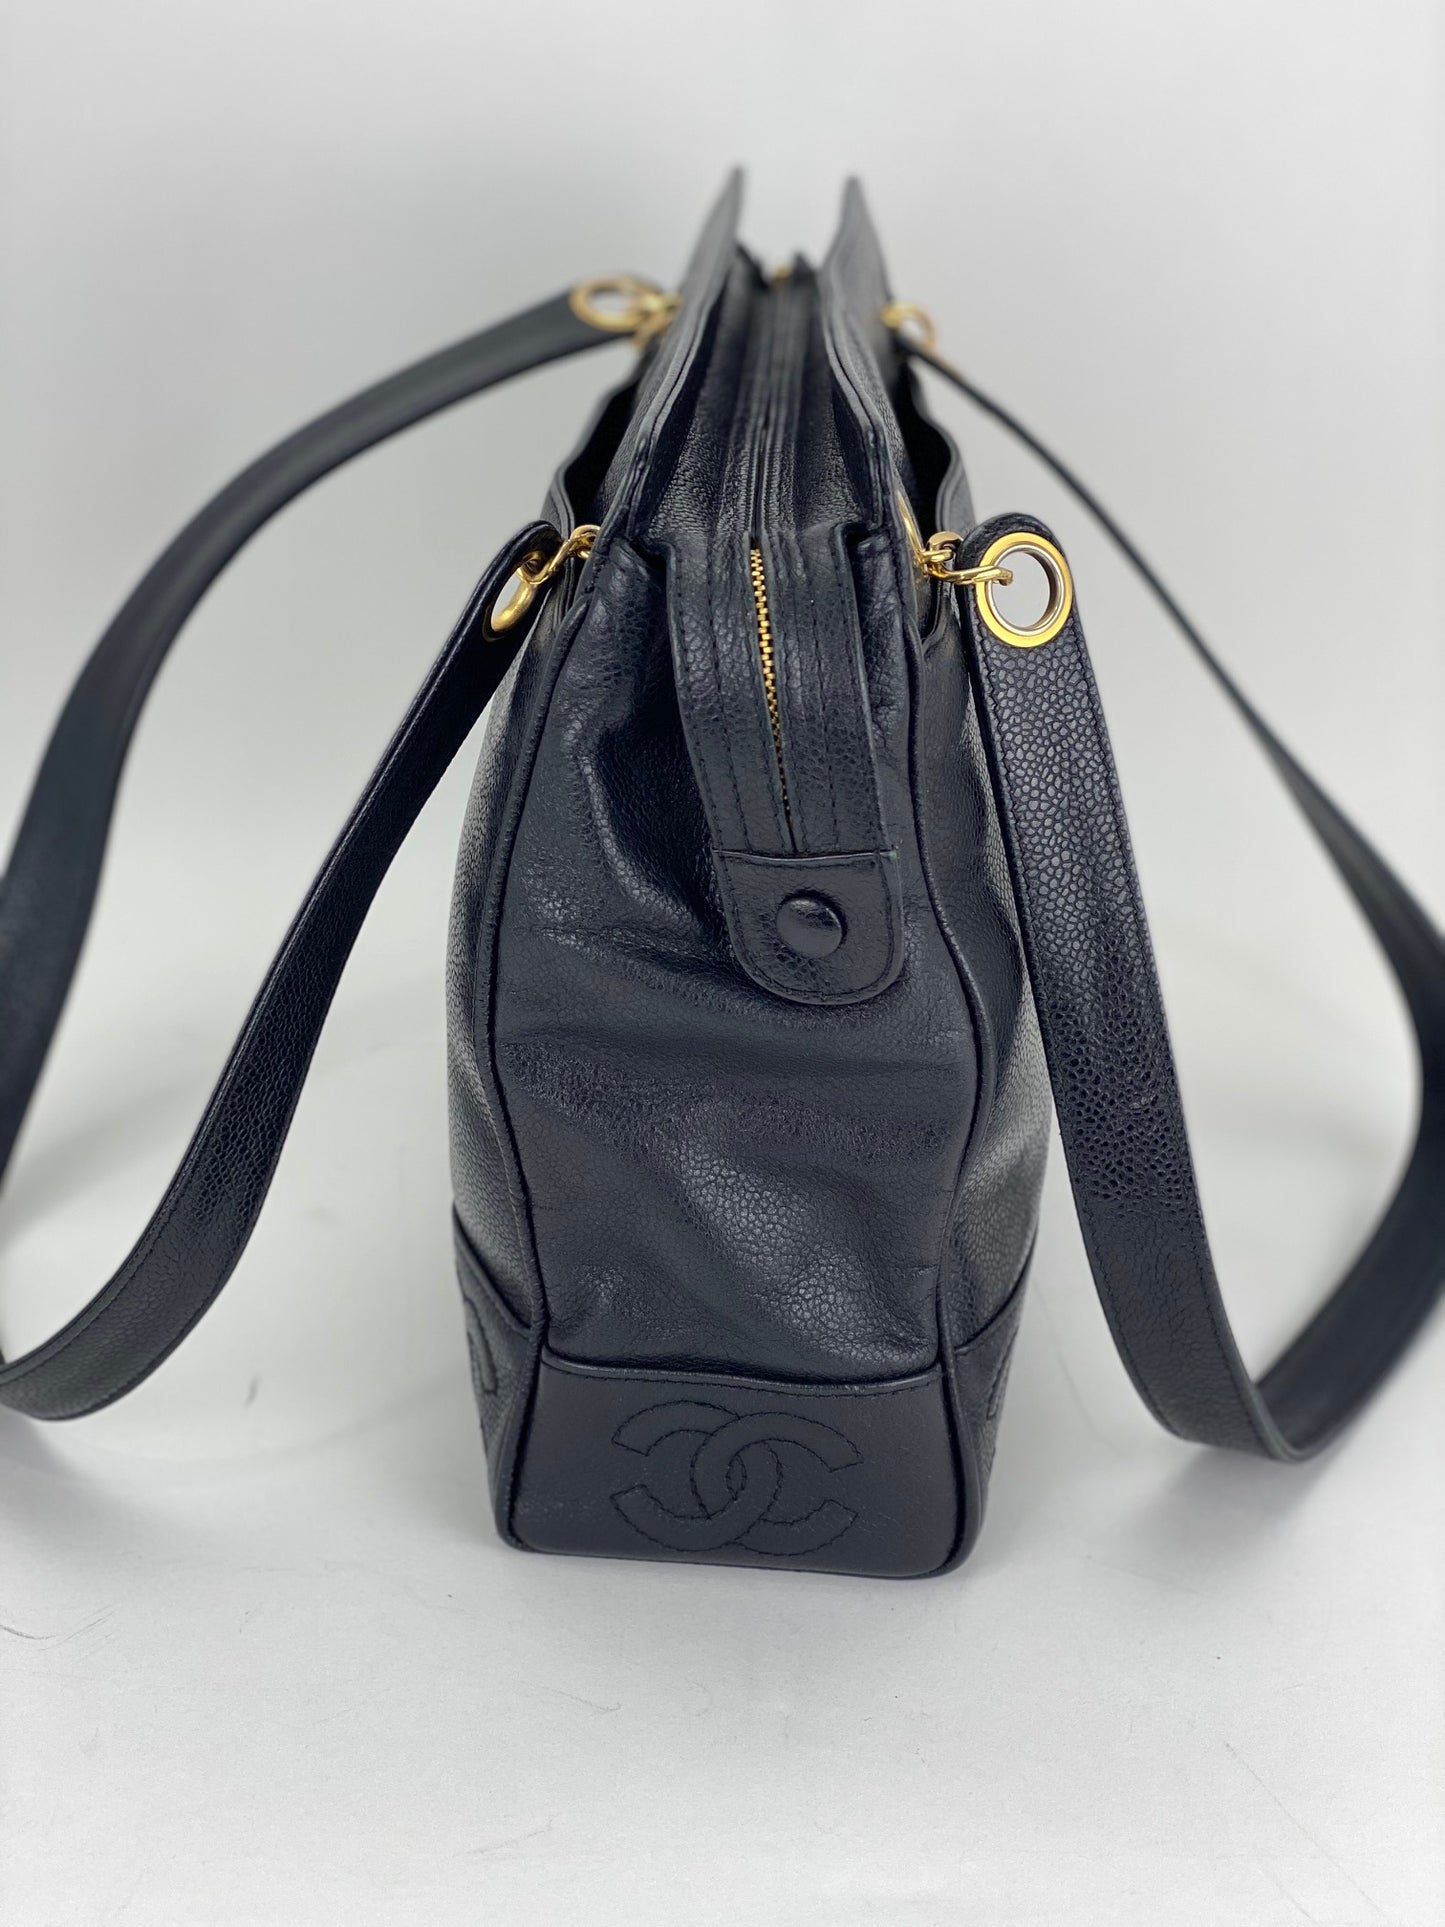 Chanel Chevron Metallic Bucket Bag - Pristine